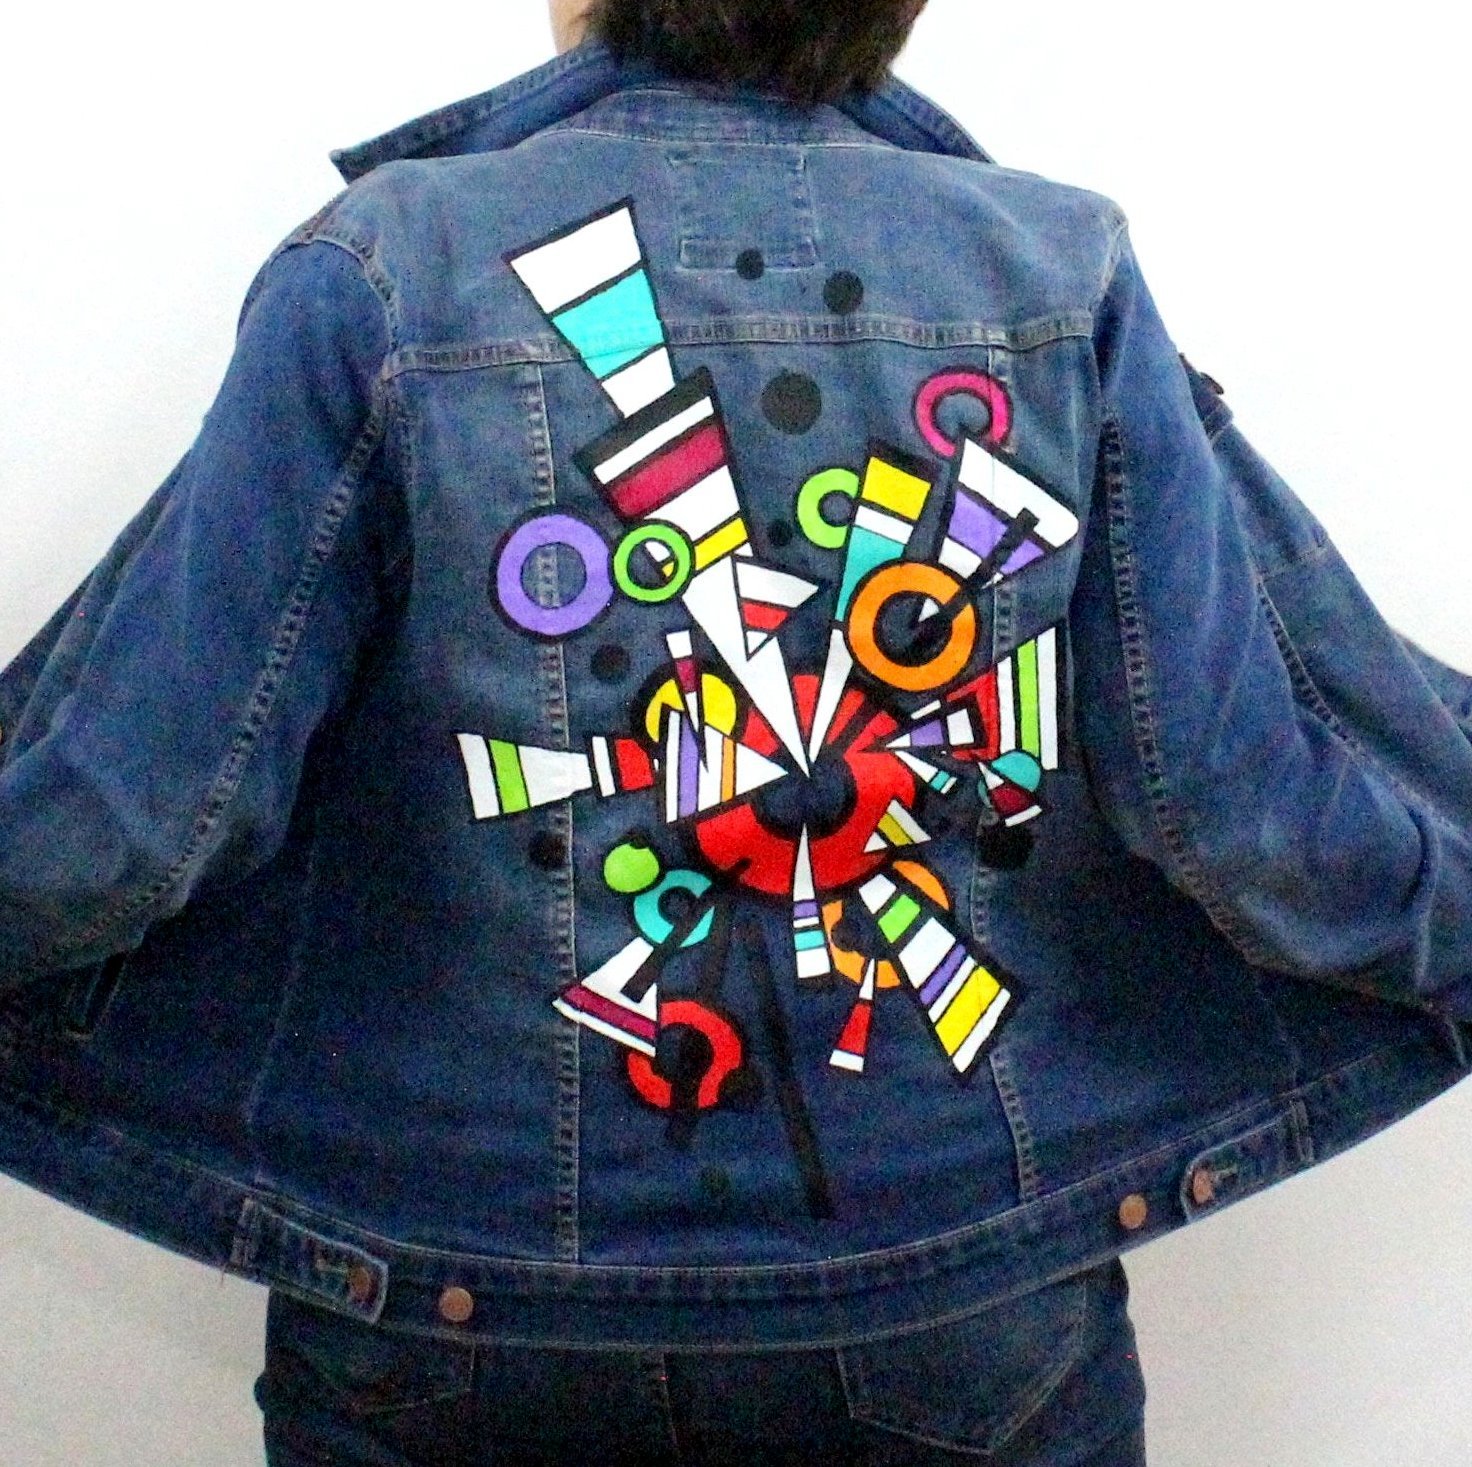 Discover more than 213 buy denim jacket online